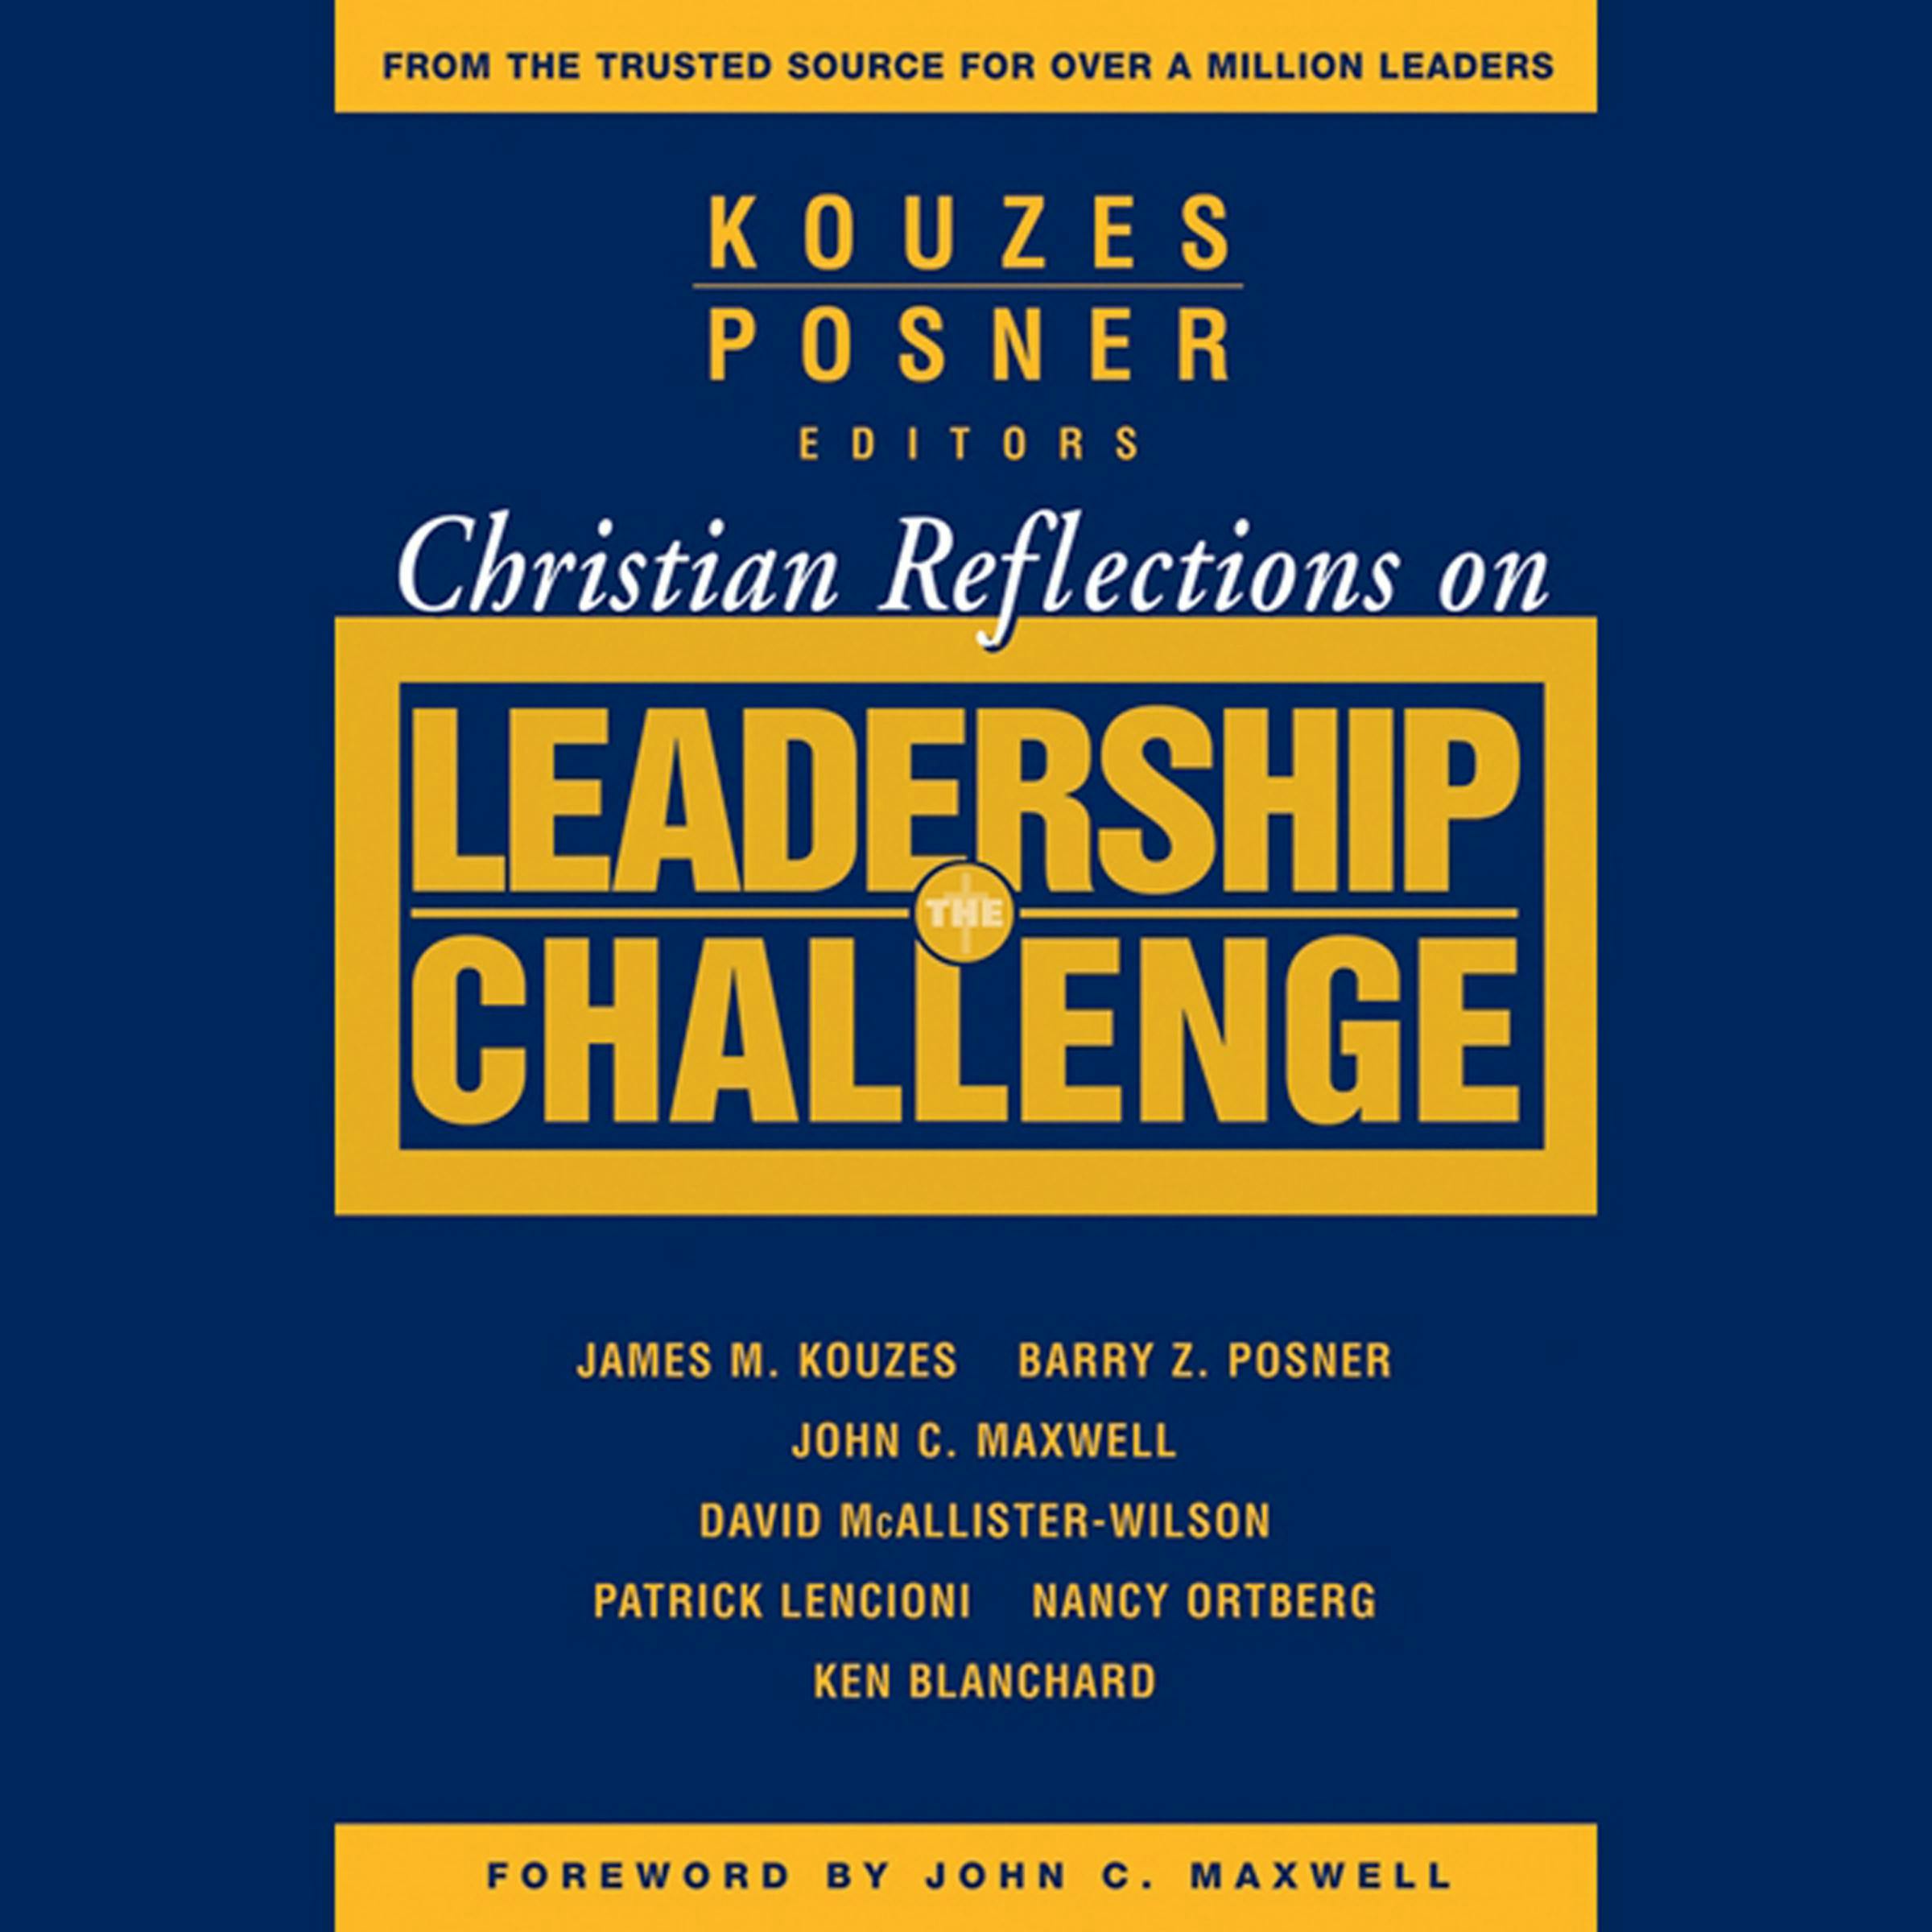 Christian Reflections on The Leadership Challenge - Nancy Ortberg, Barry Z. Posner, James M. Kouzes, Patrick Lencioni, David McAllister-Wilson, John C. Maxwell, Ken Blanchard